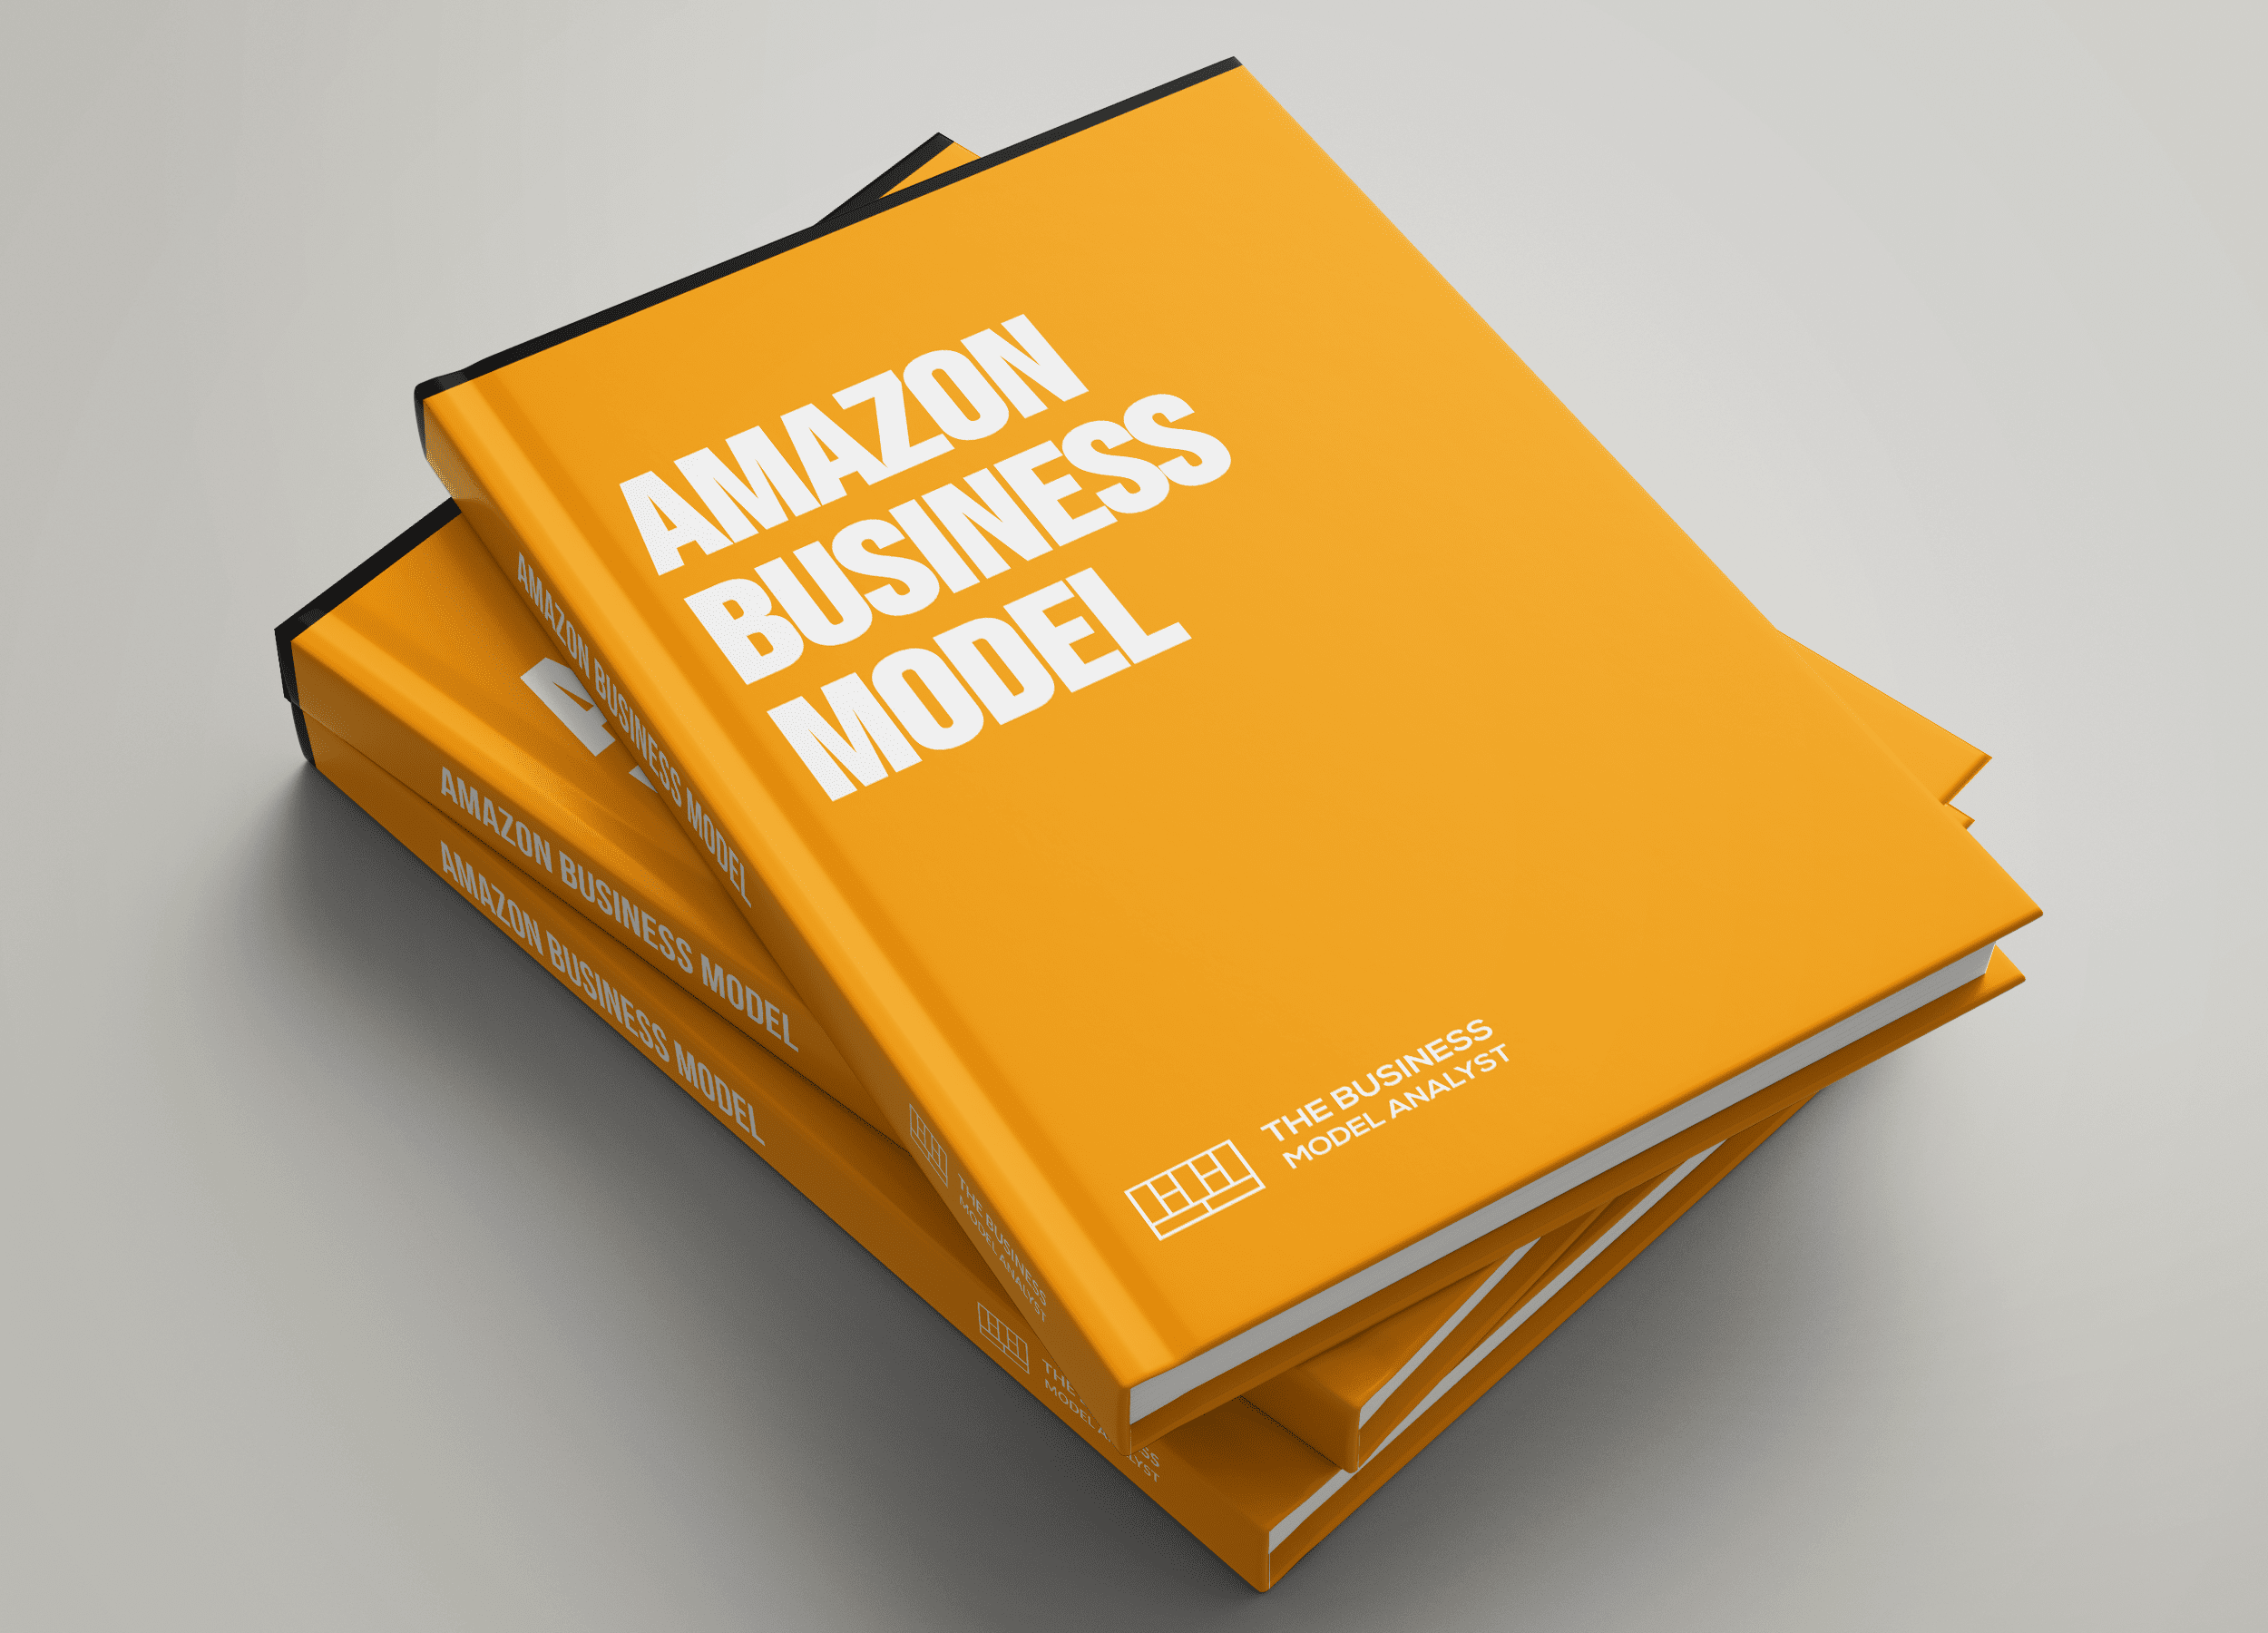 Amazon Business Model Covers